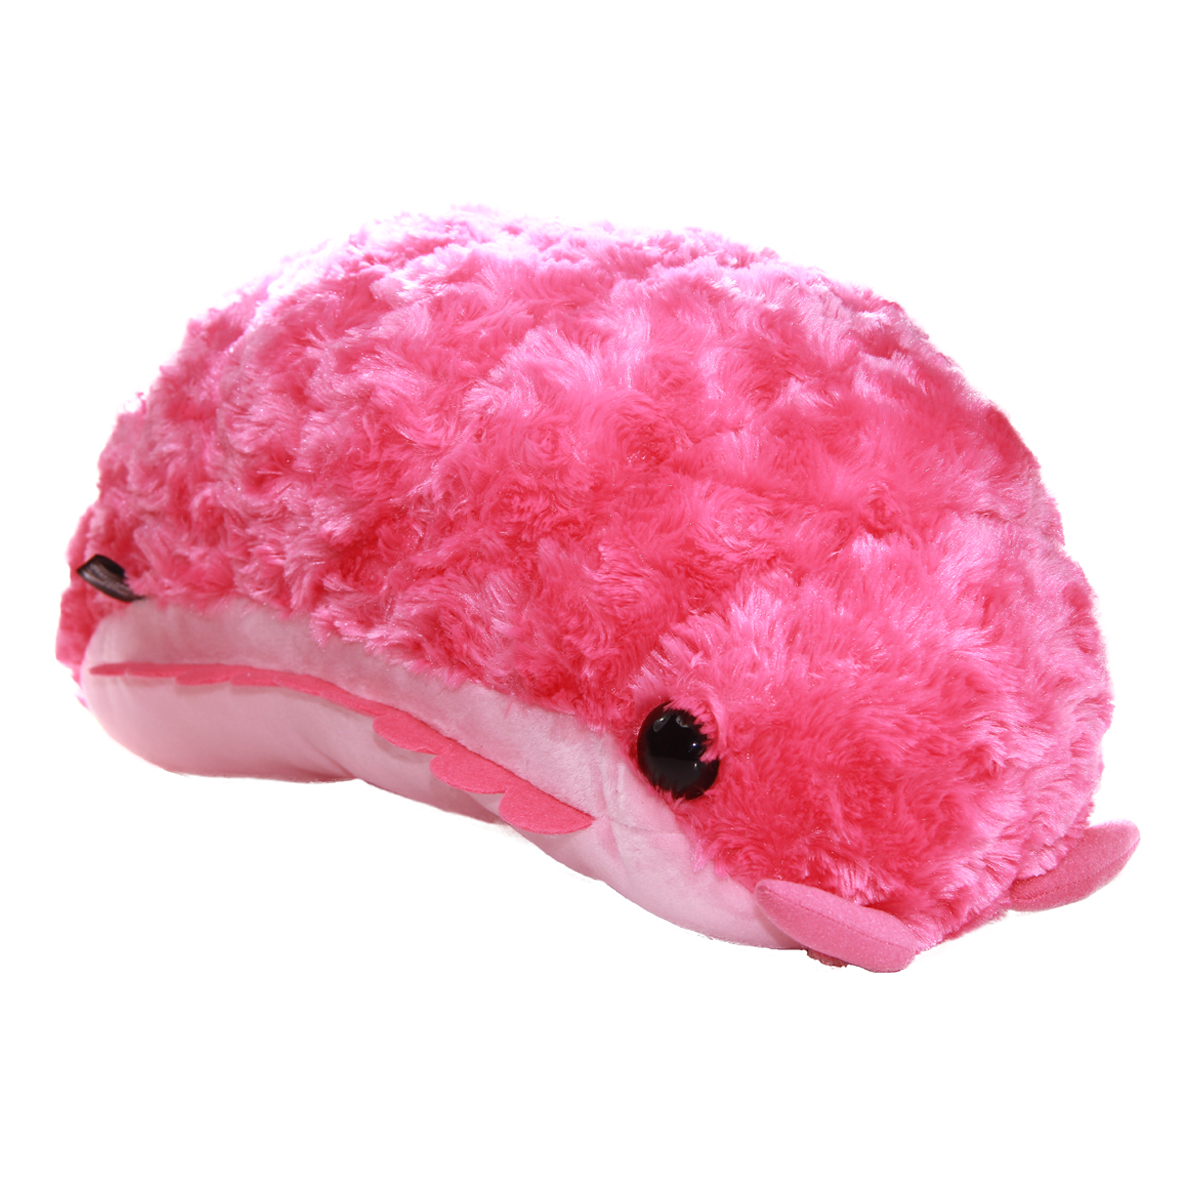 Dangomushi Super Soft Larva Roly Poly Plush Toy Pink Size 17 Inches BIG